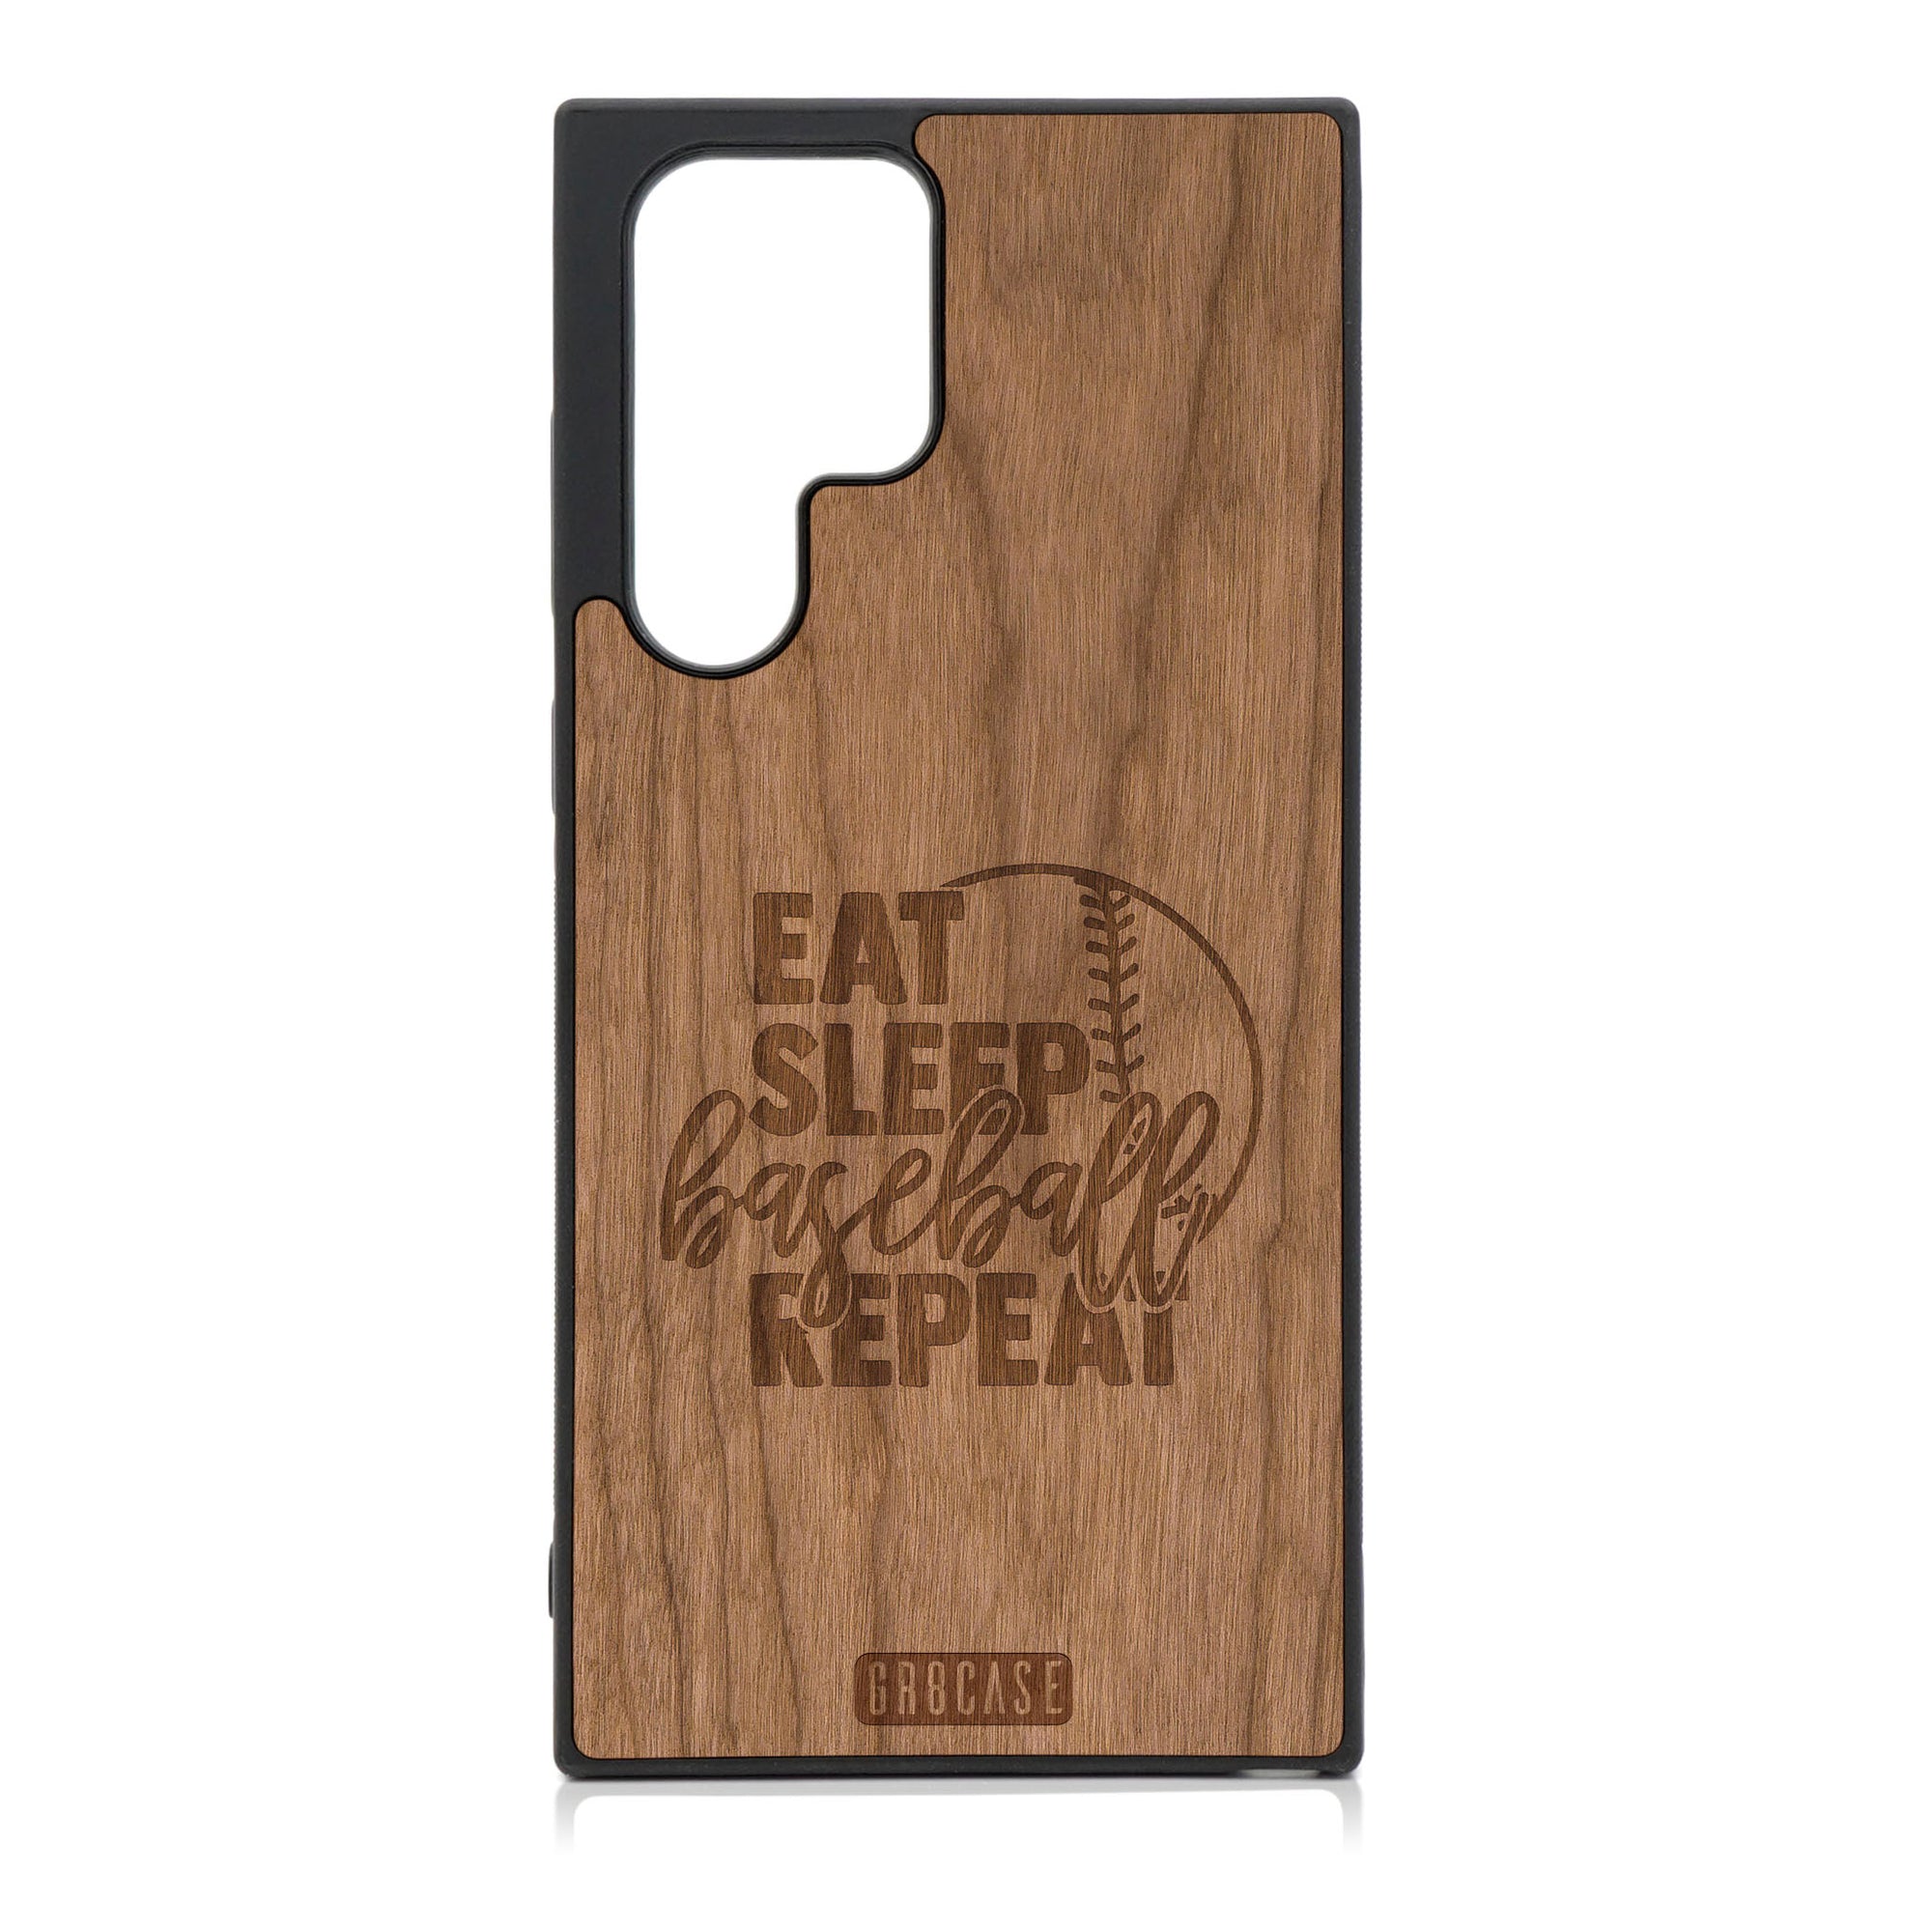 Eat Sleep Baseball Repeat Design Wood Phone Case For Galaxy S22 Ultra